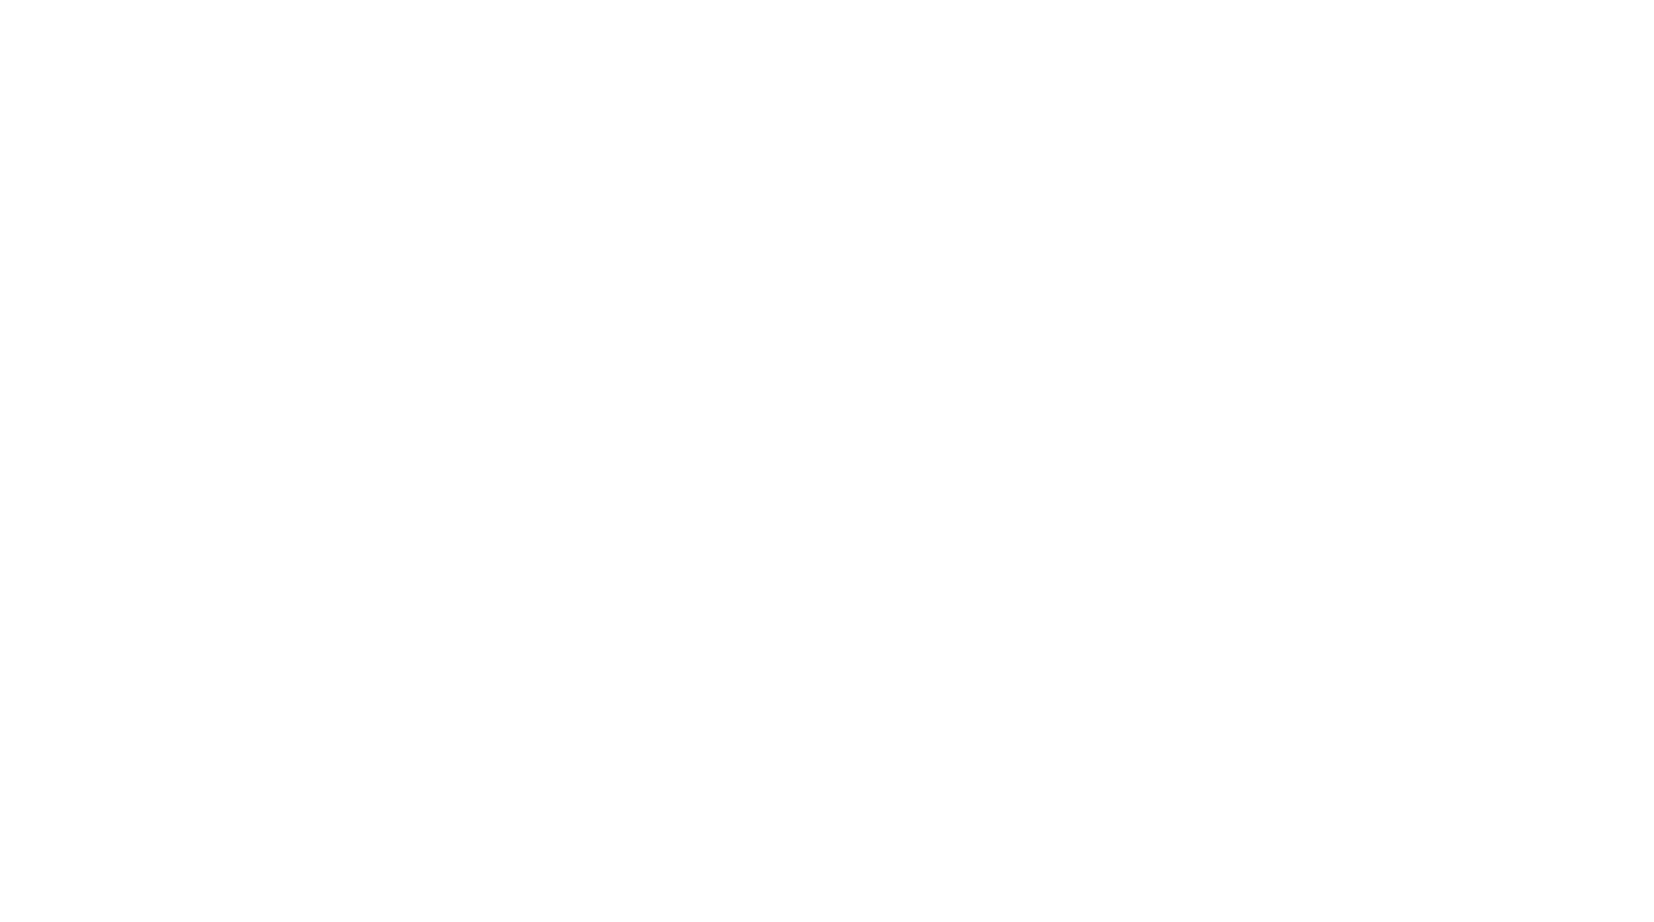 itei_logo